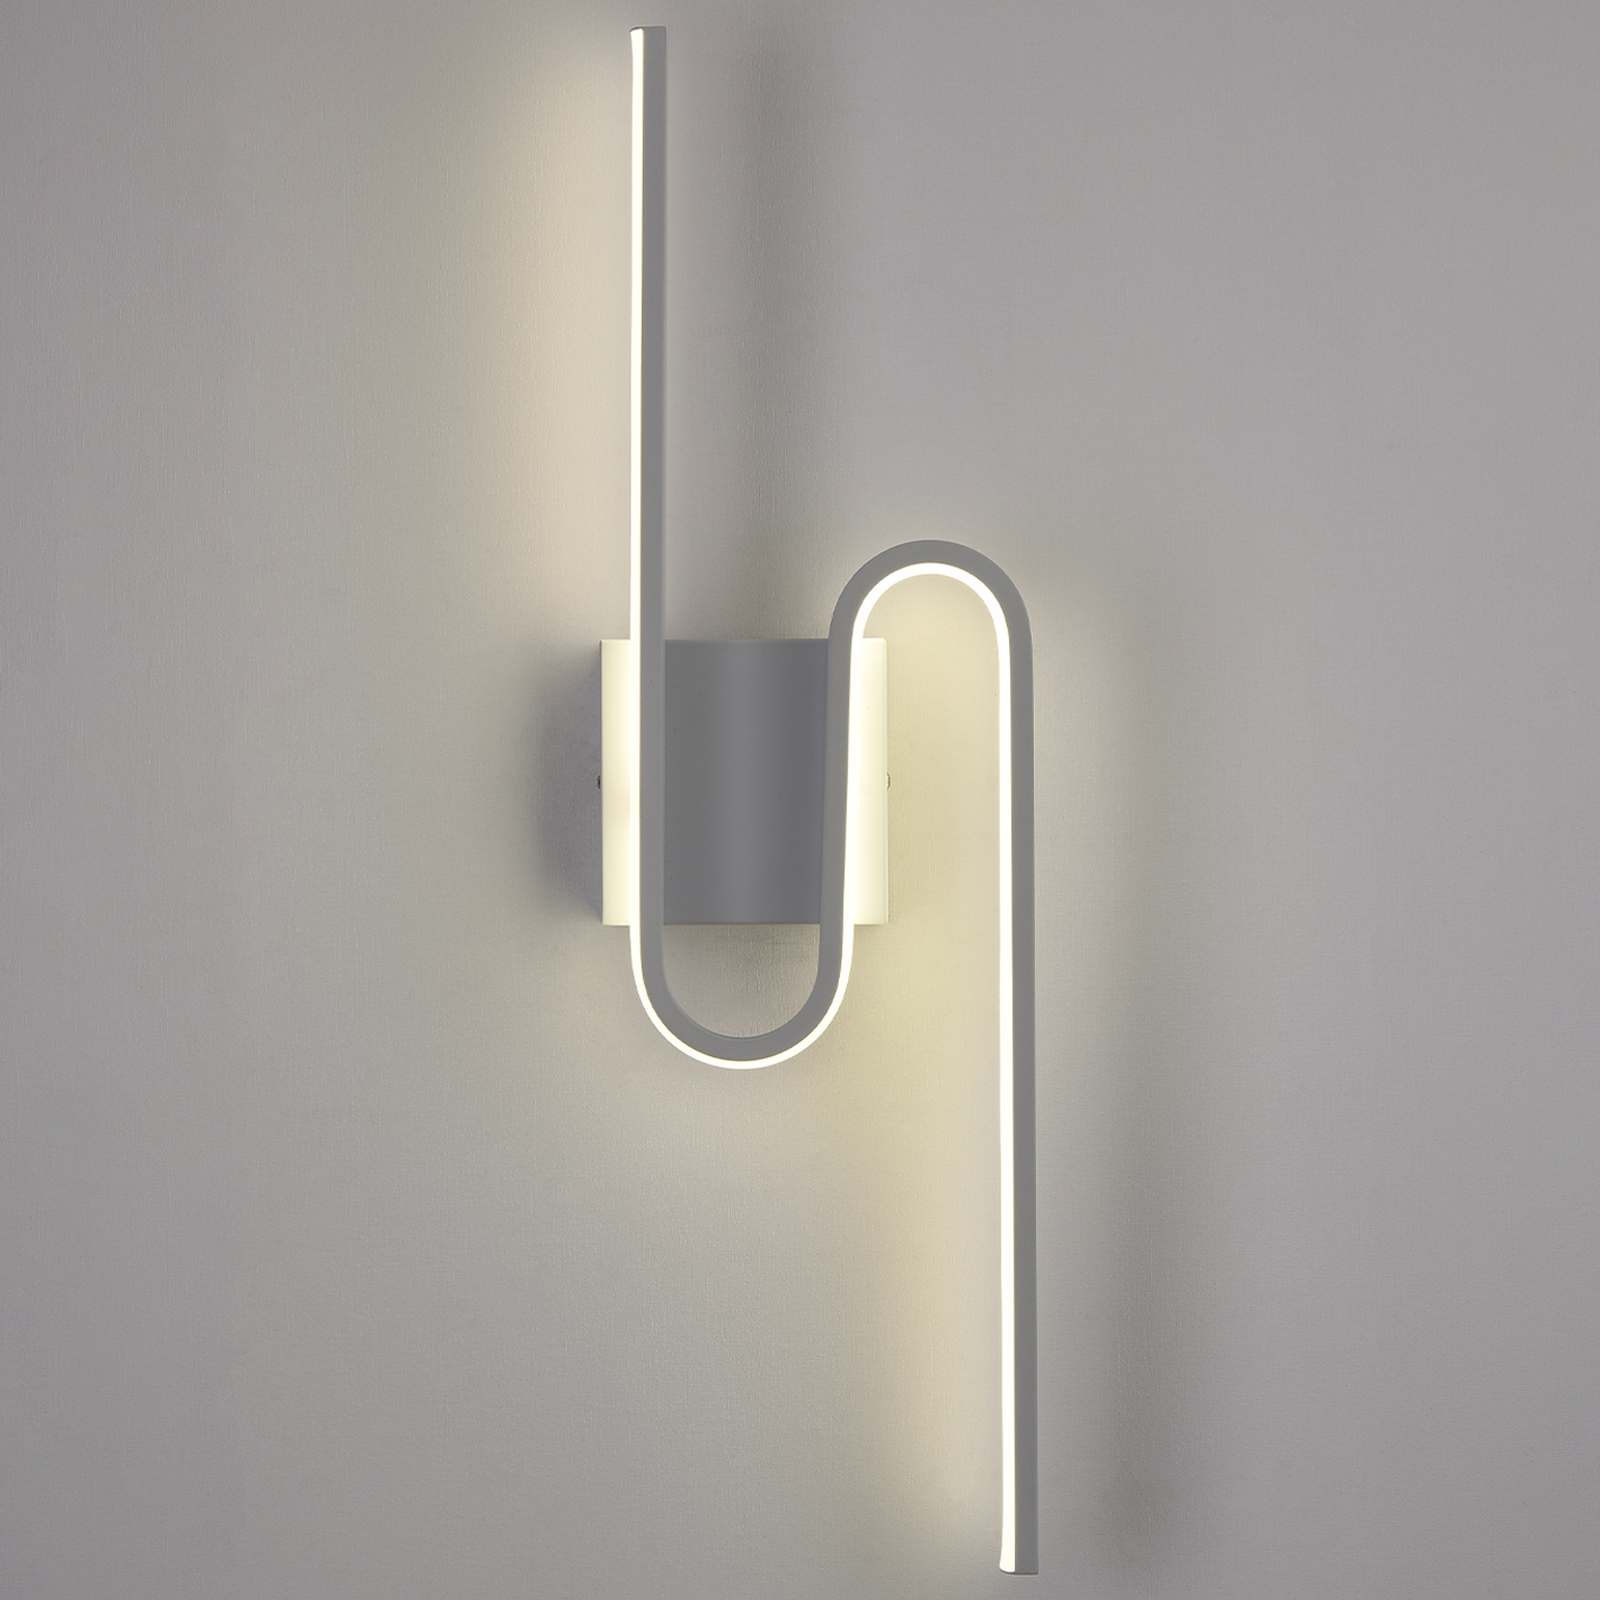 Led Sconces Wall Lighting Indoor White Led Bathroom Light Fixture Vanity Lights Over Mirror